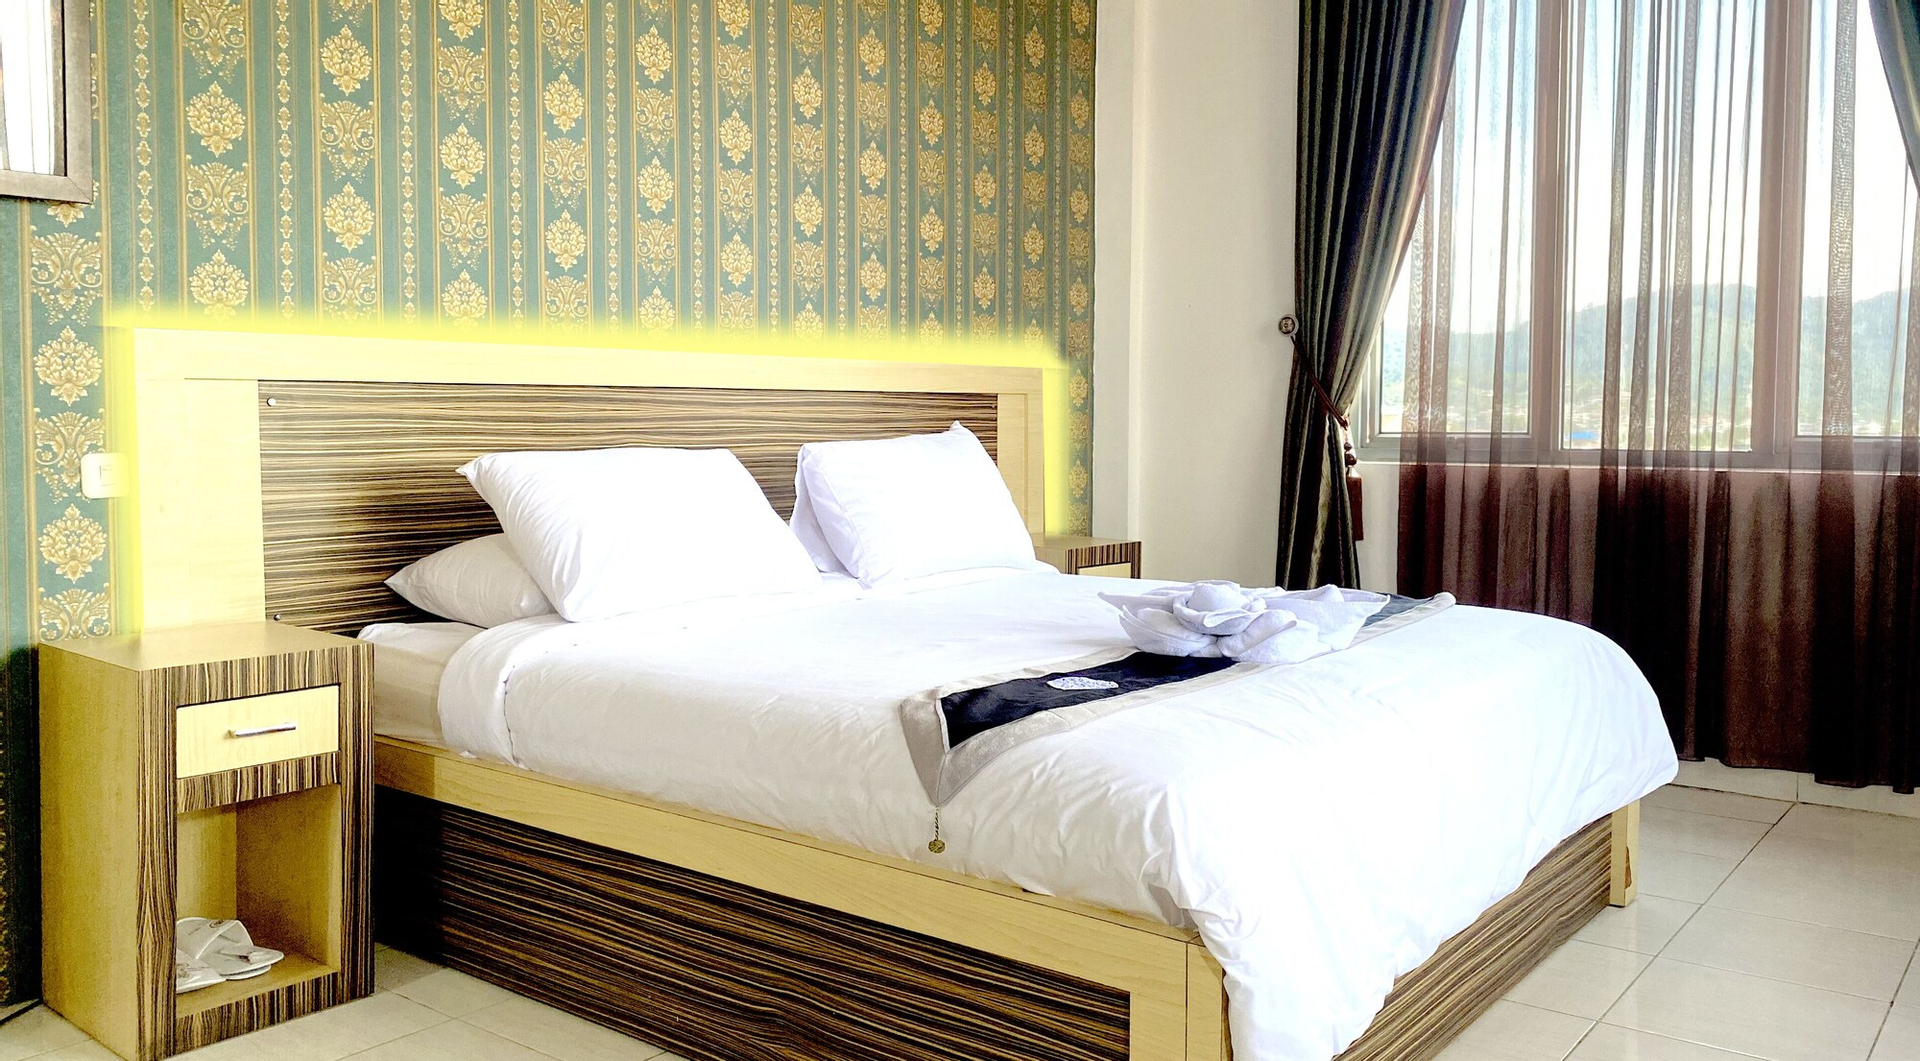 Bedroom 3, Bayu Hill Hotel 2 Star, Aceh Tengah